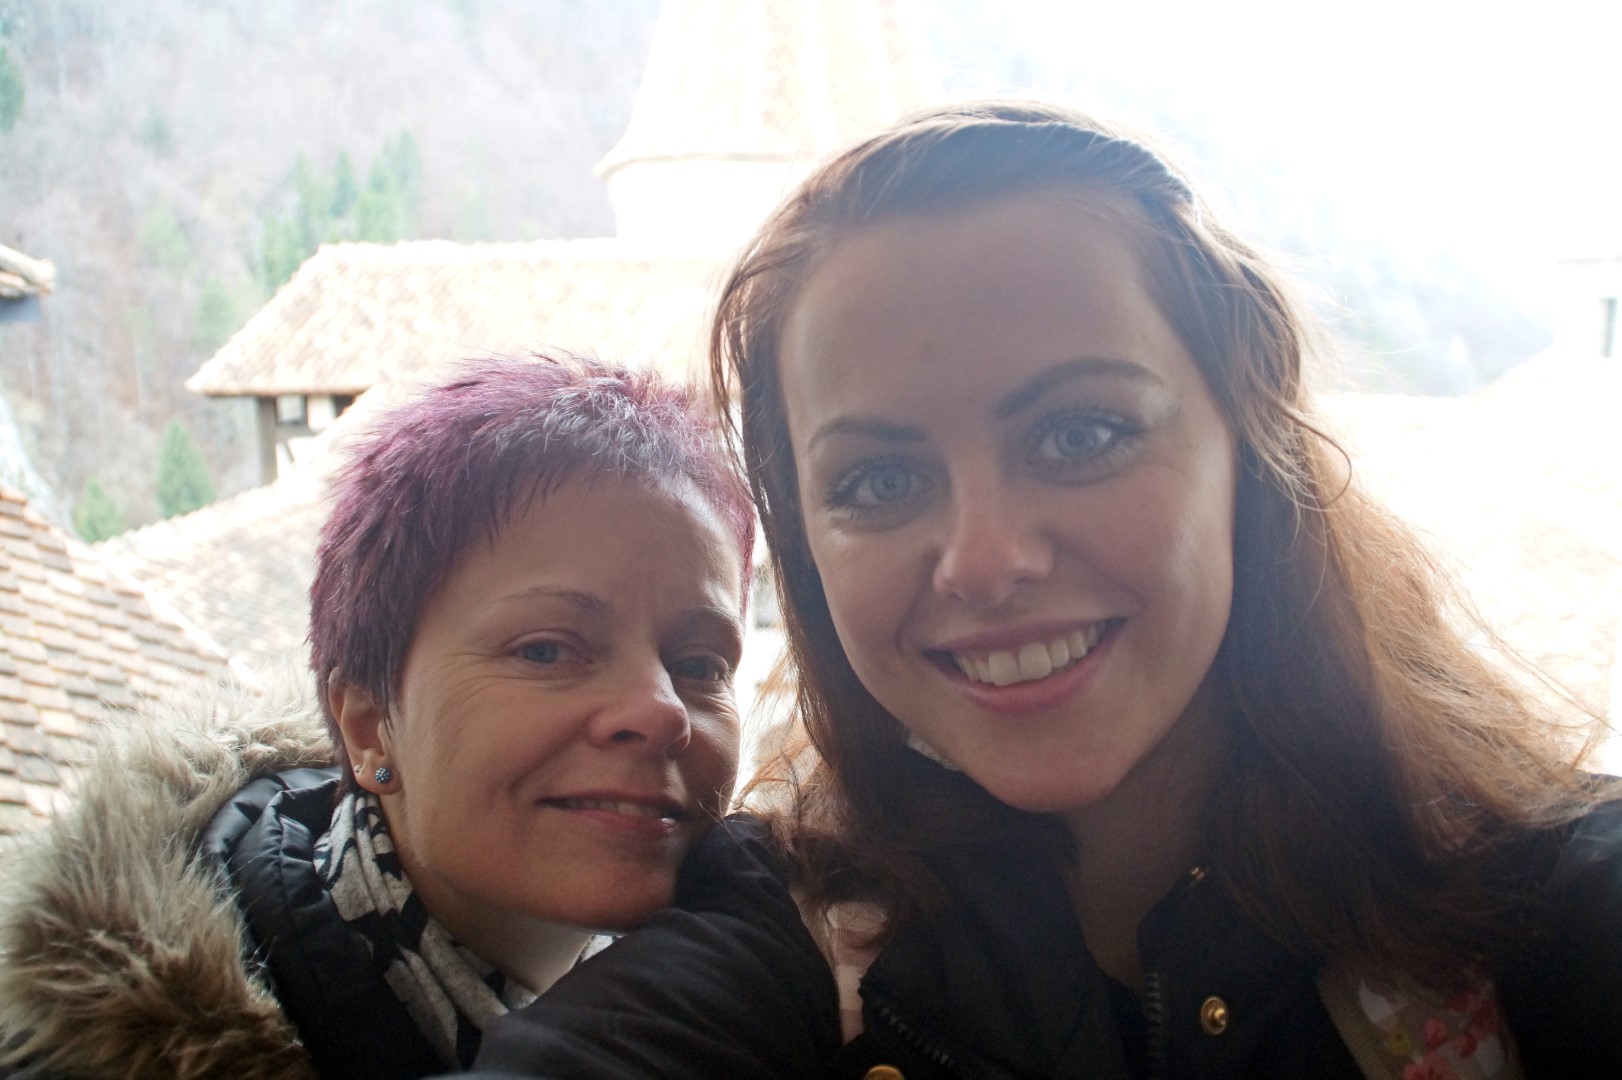 Mother/daughter selfie at Bran Castle!